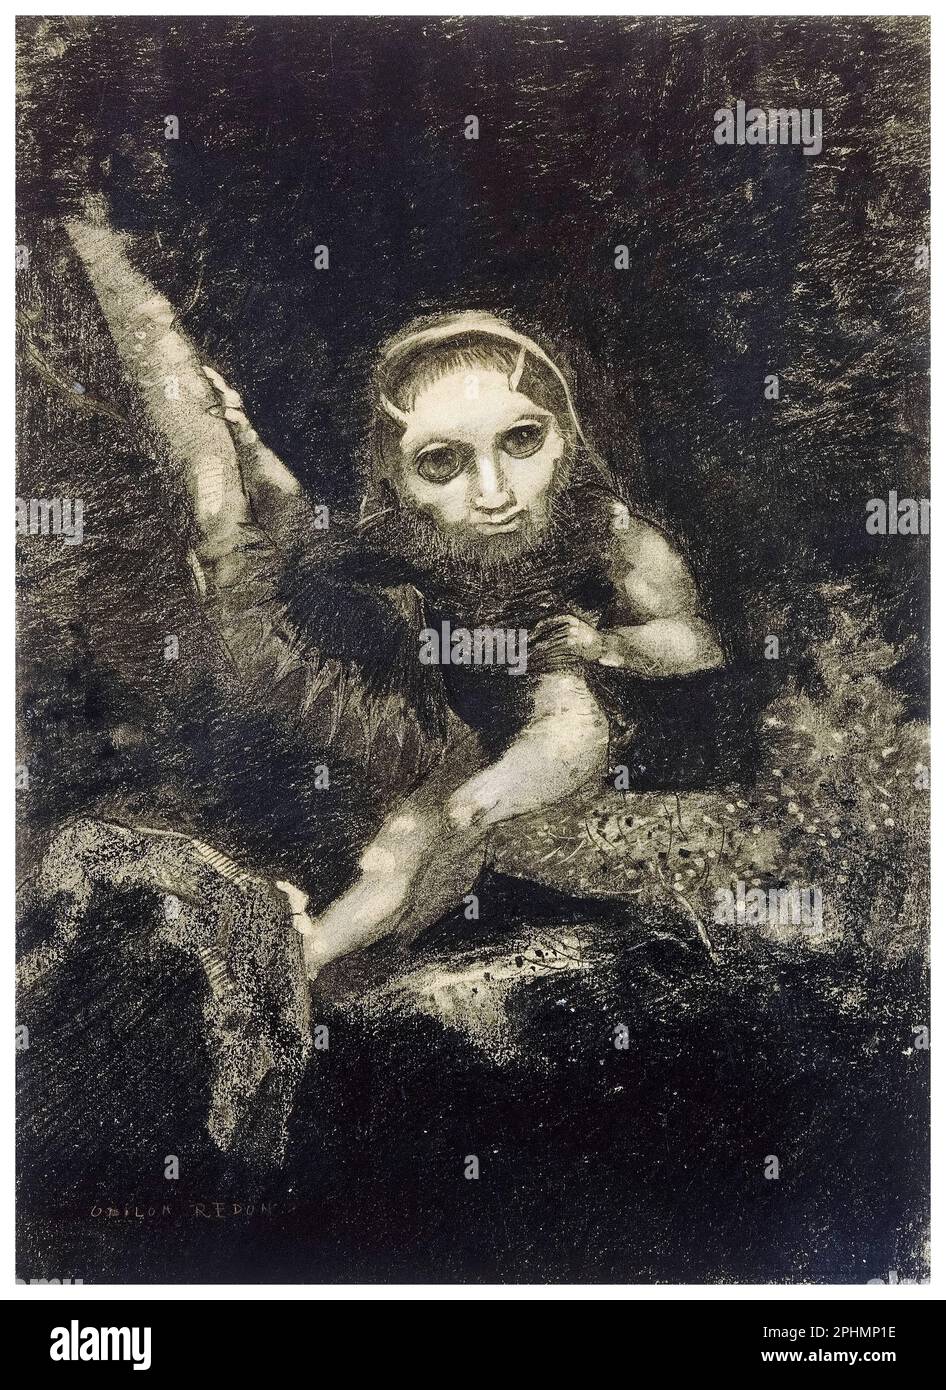 Odilon Redon, Caliban, Charloal-Zeichnung, 1881 Stockfoto